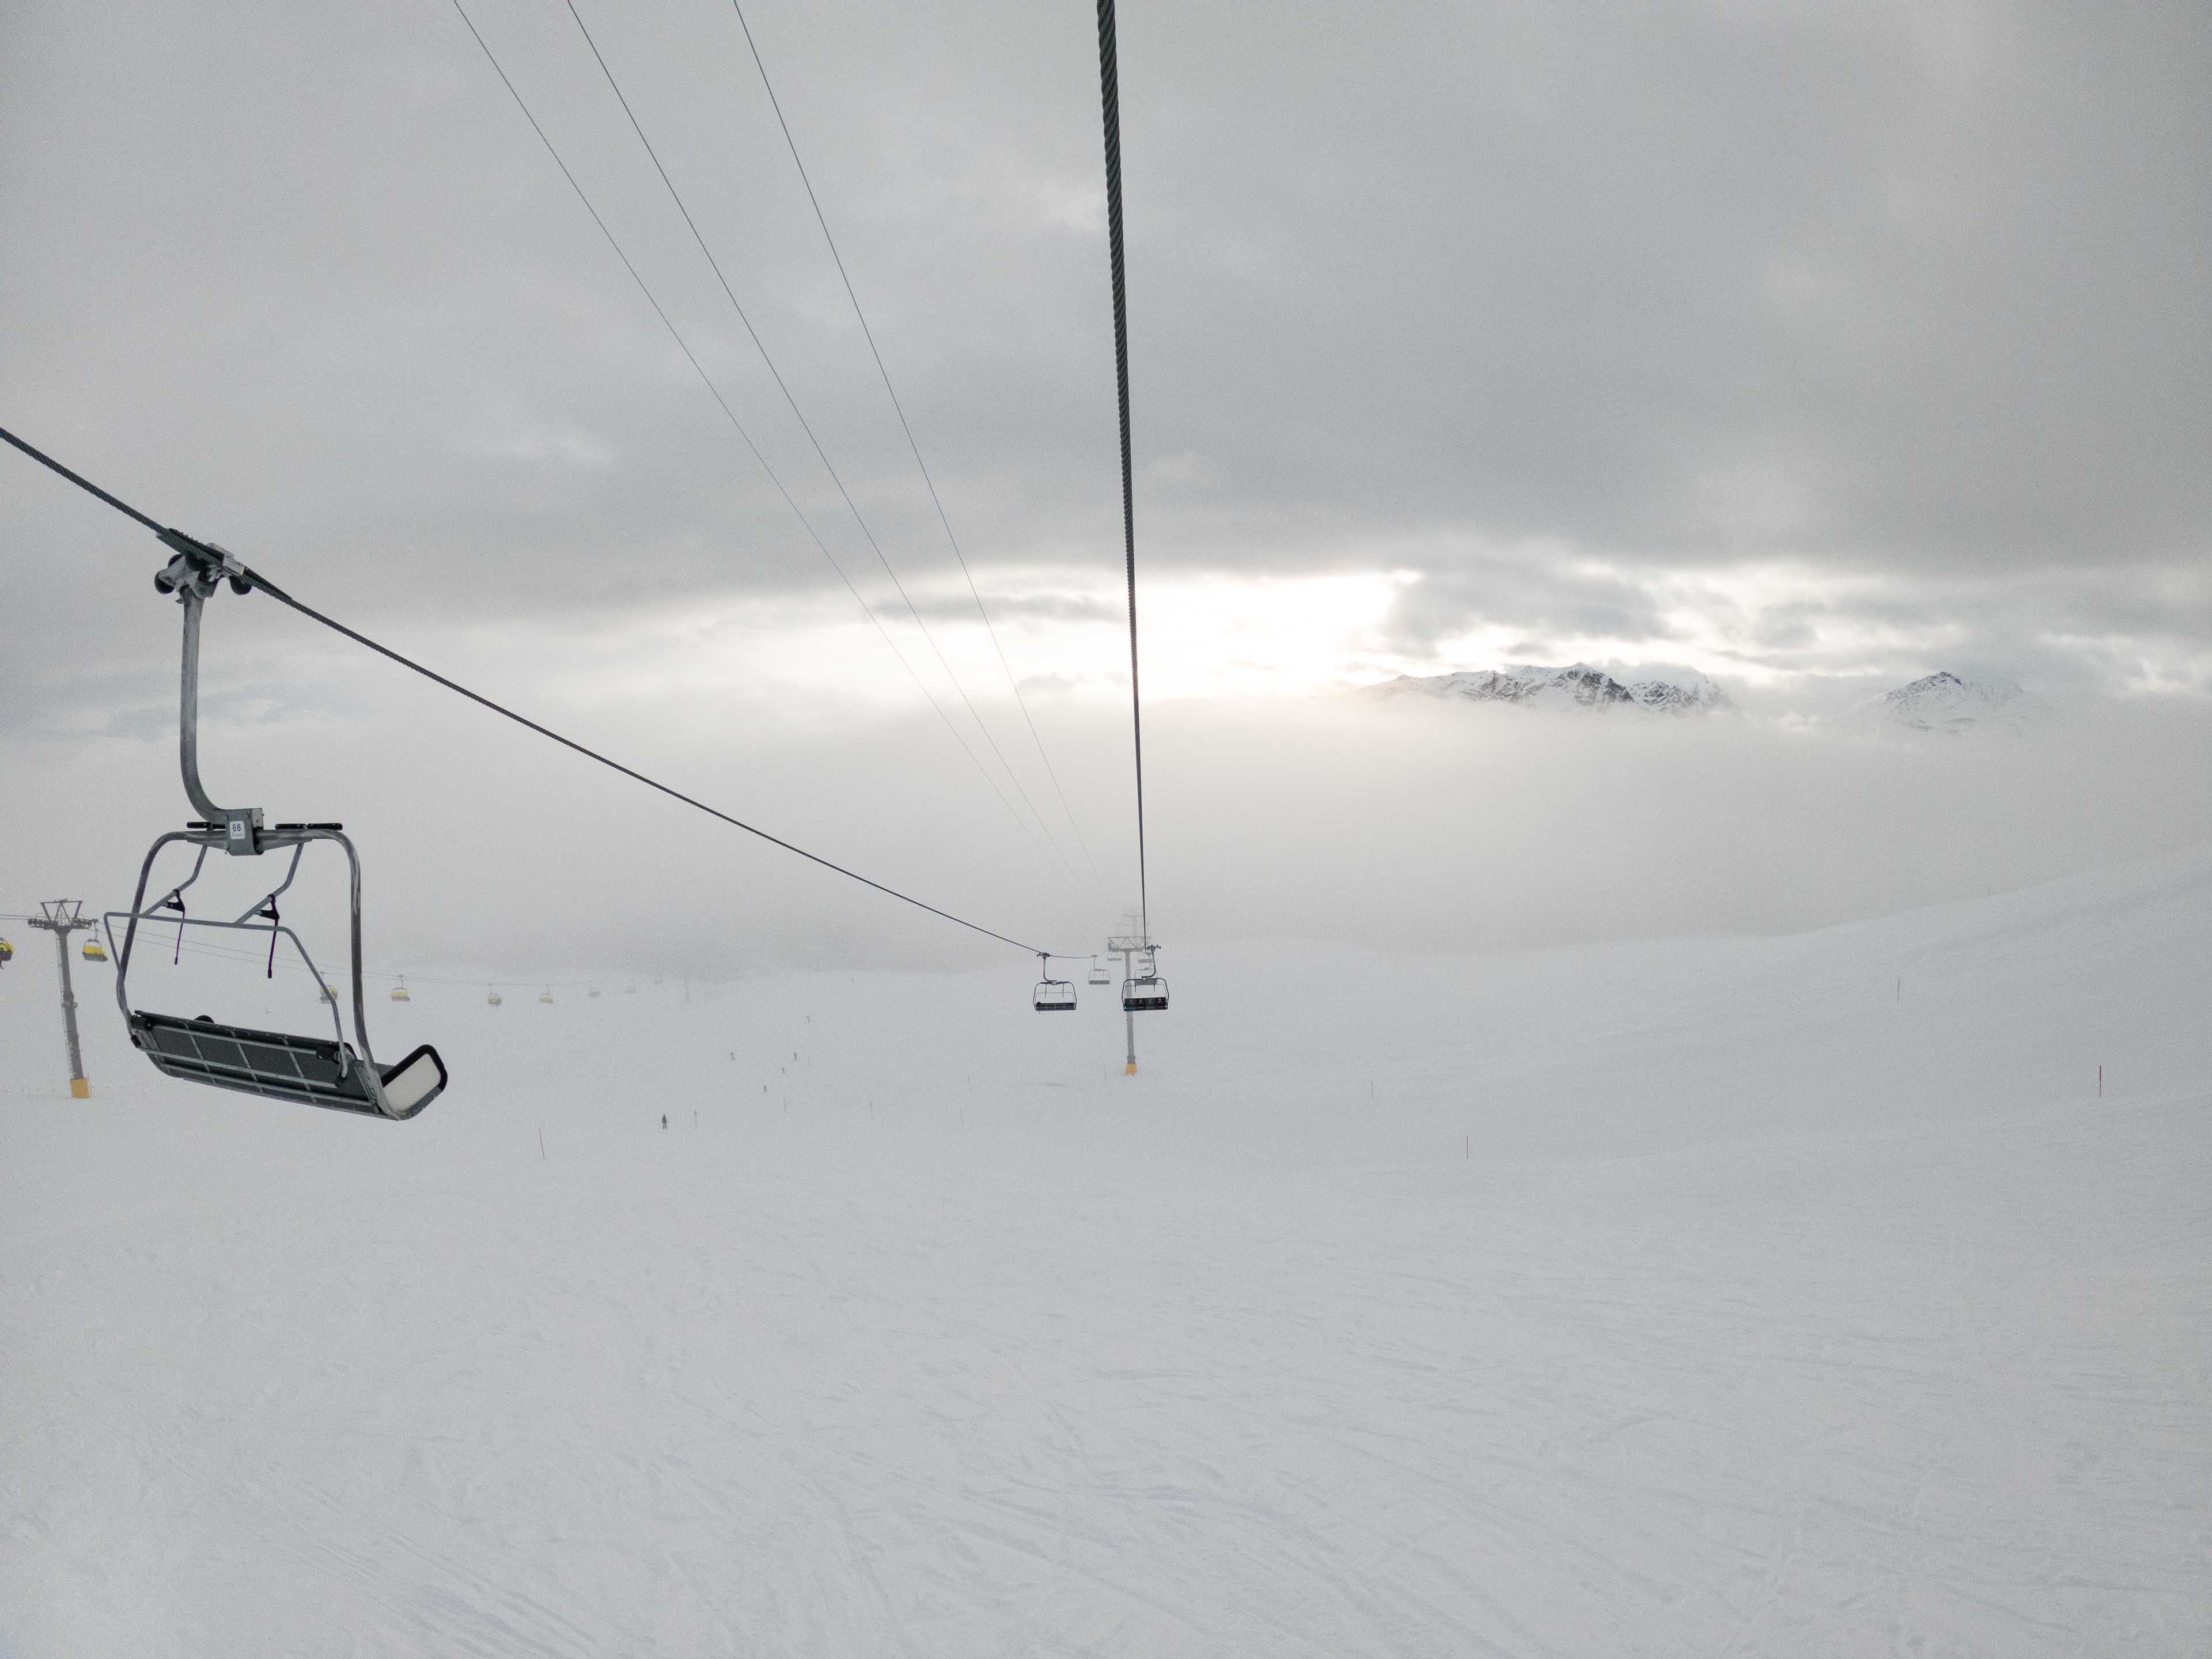 Alp Giop chairlift, Corviglia, St. Moritz